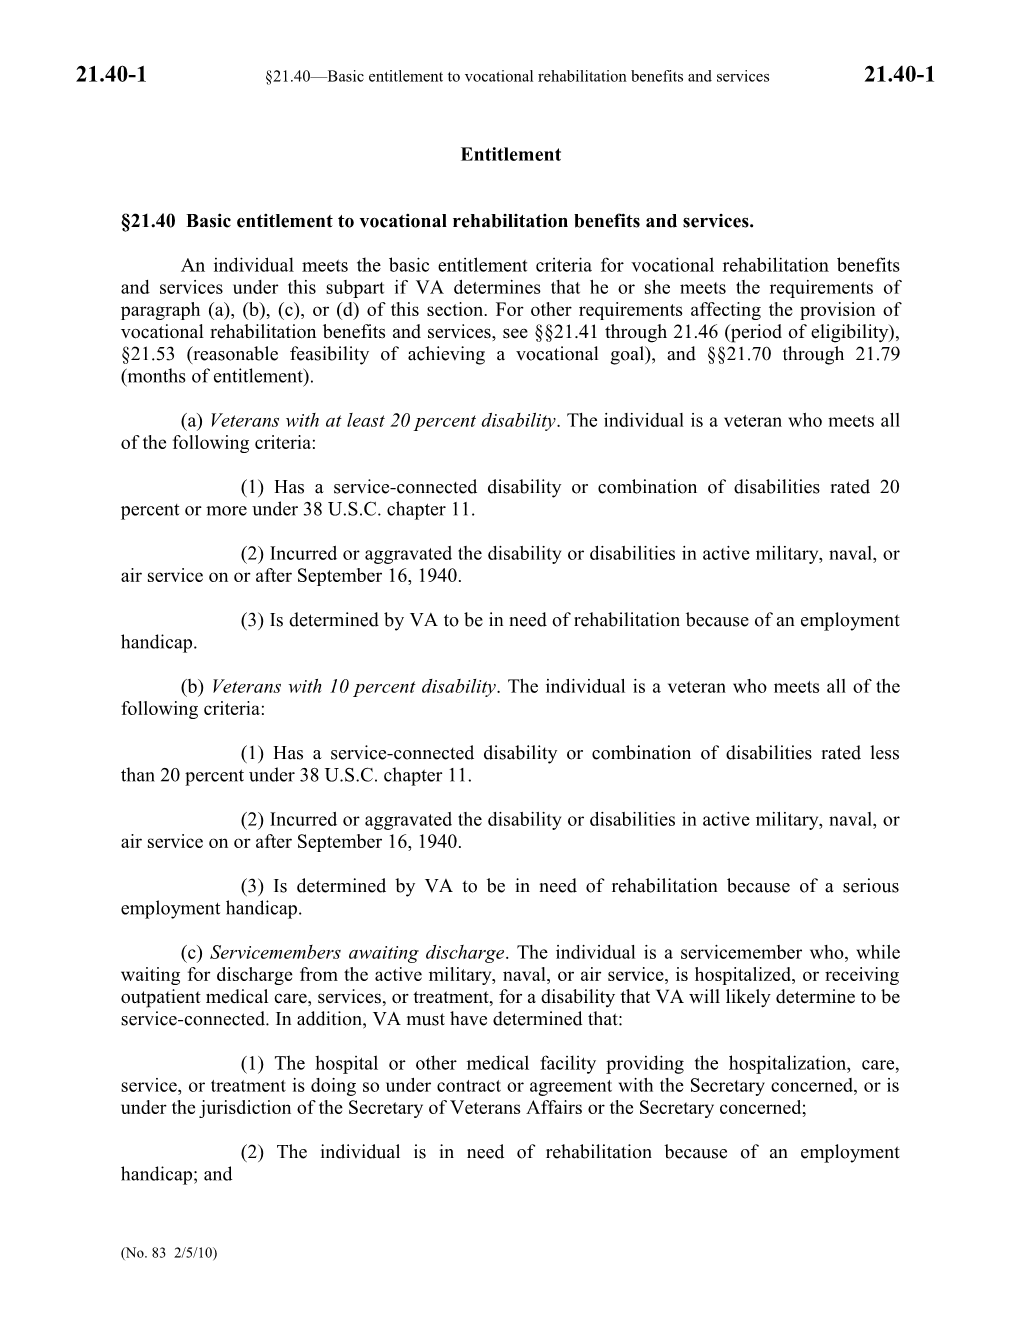 21.40 Basic Entitlement to Vocational Rehabilitation Benefits and Services